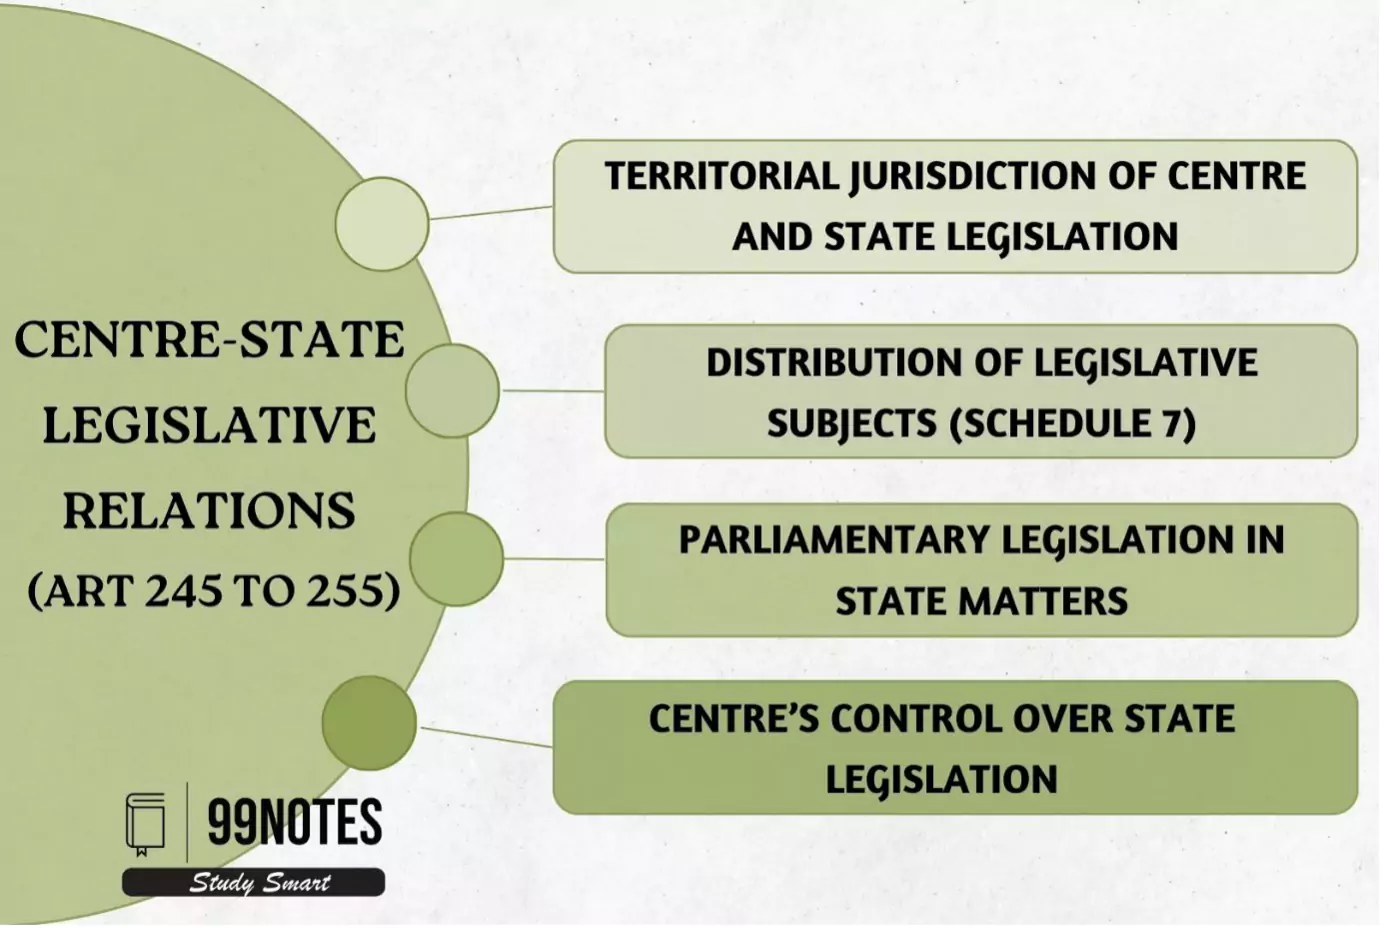 Centre-State Legislative Relations